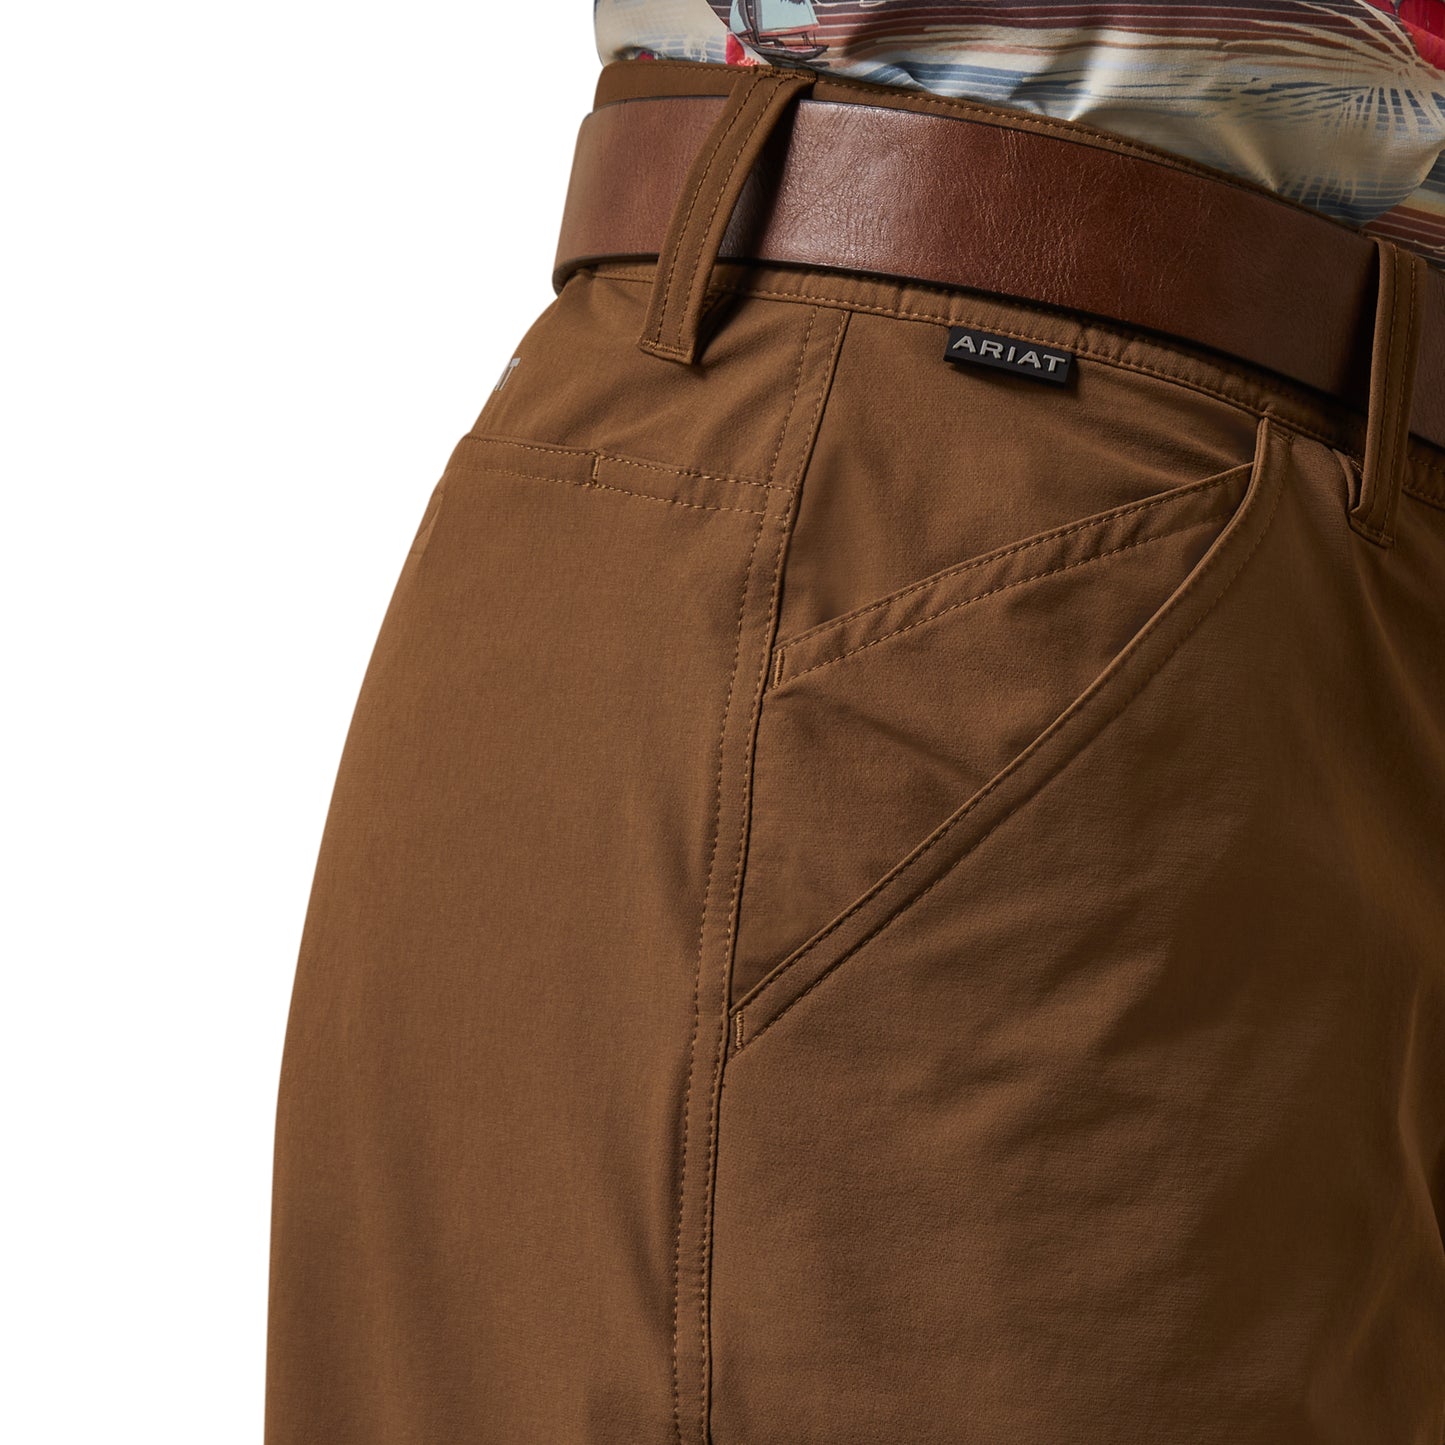 Ariat® Men's Tek 8" Teak Brown Shorts 10043181